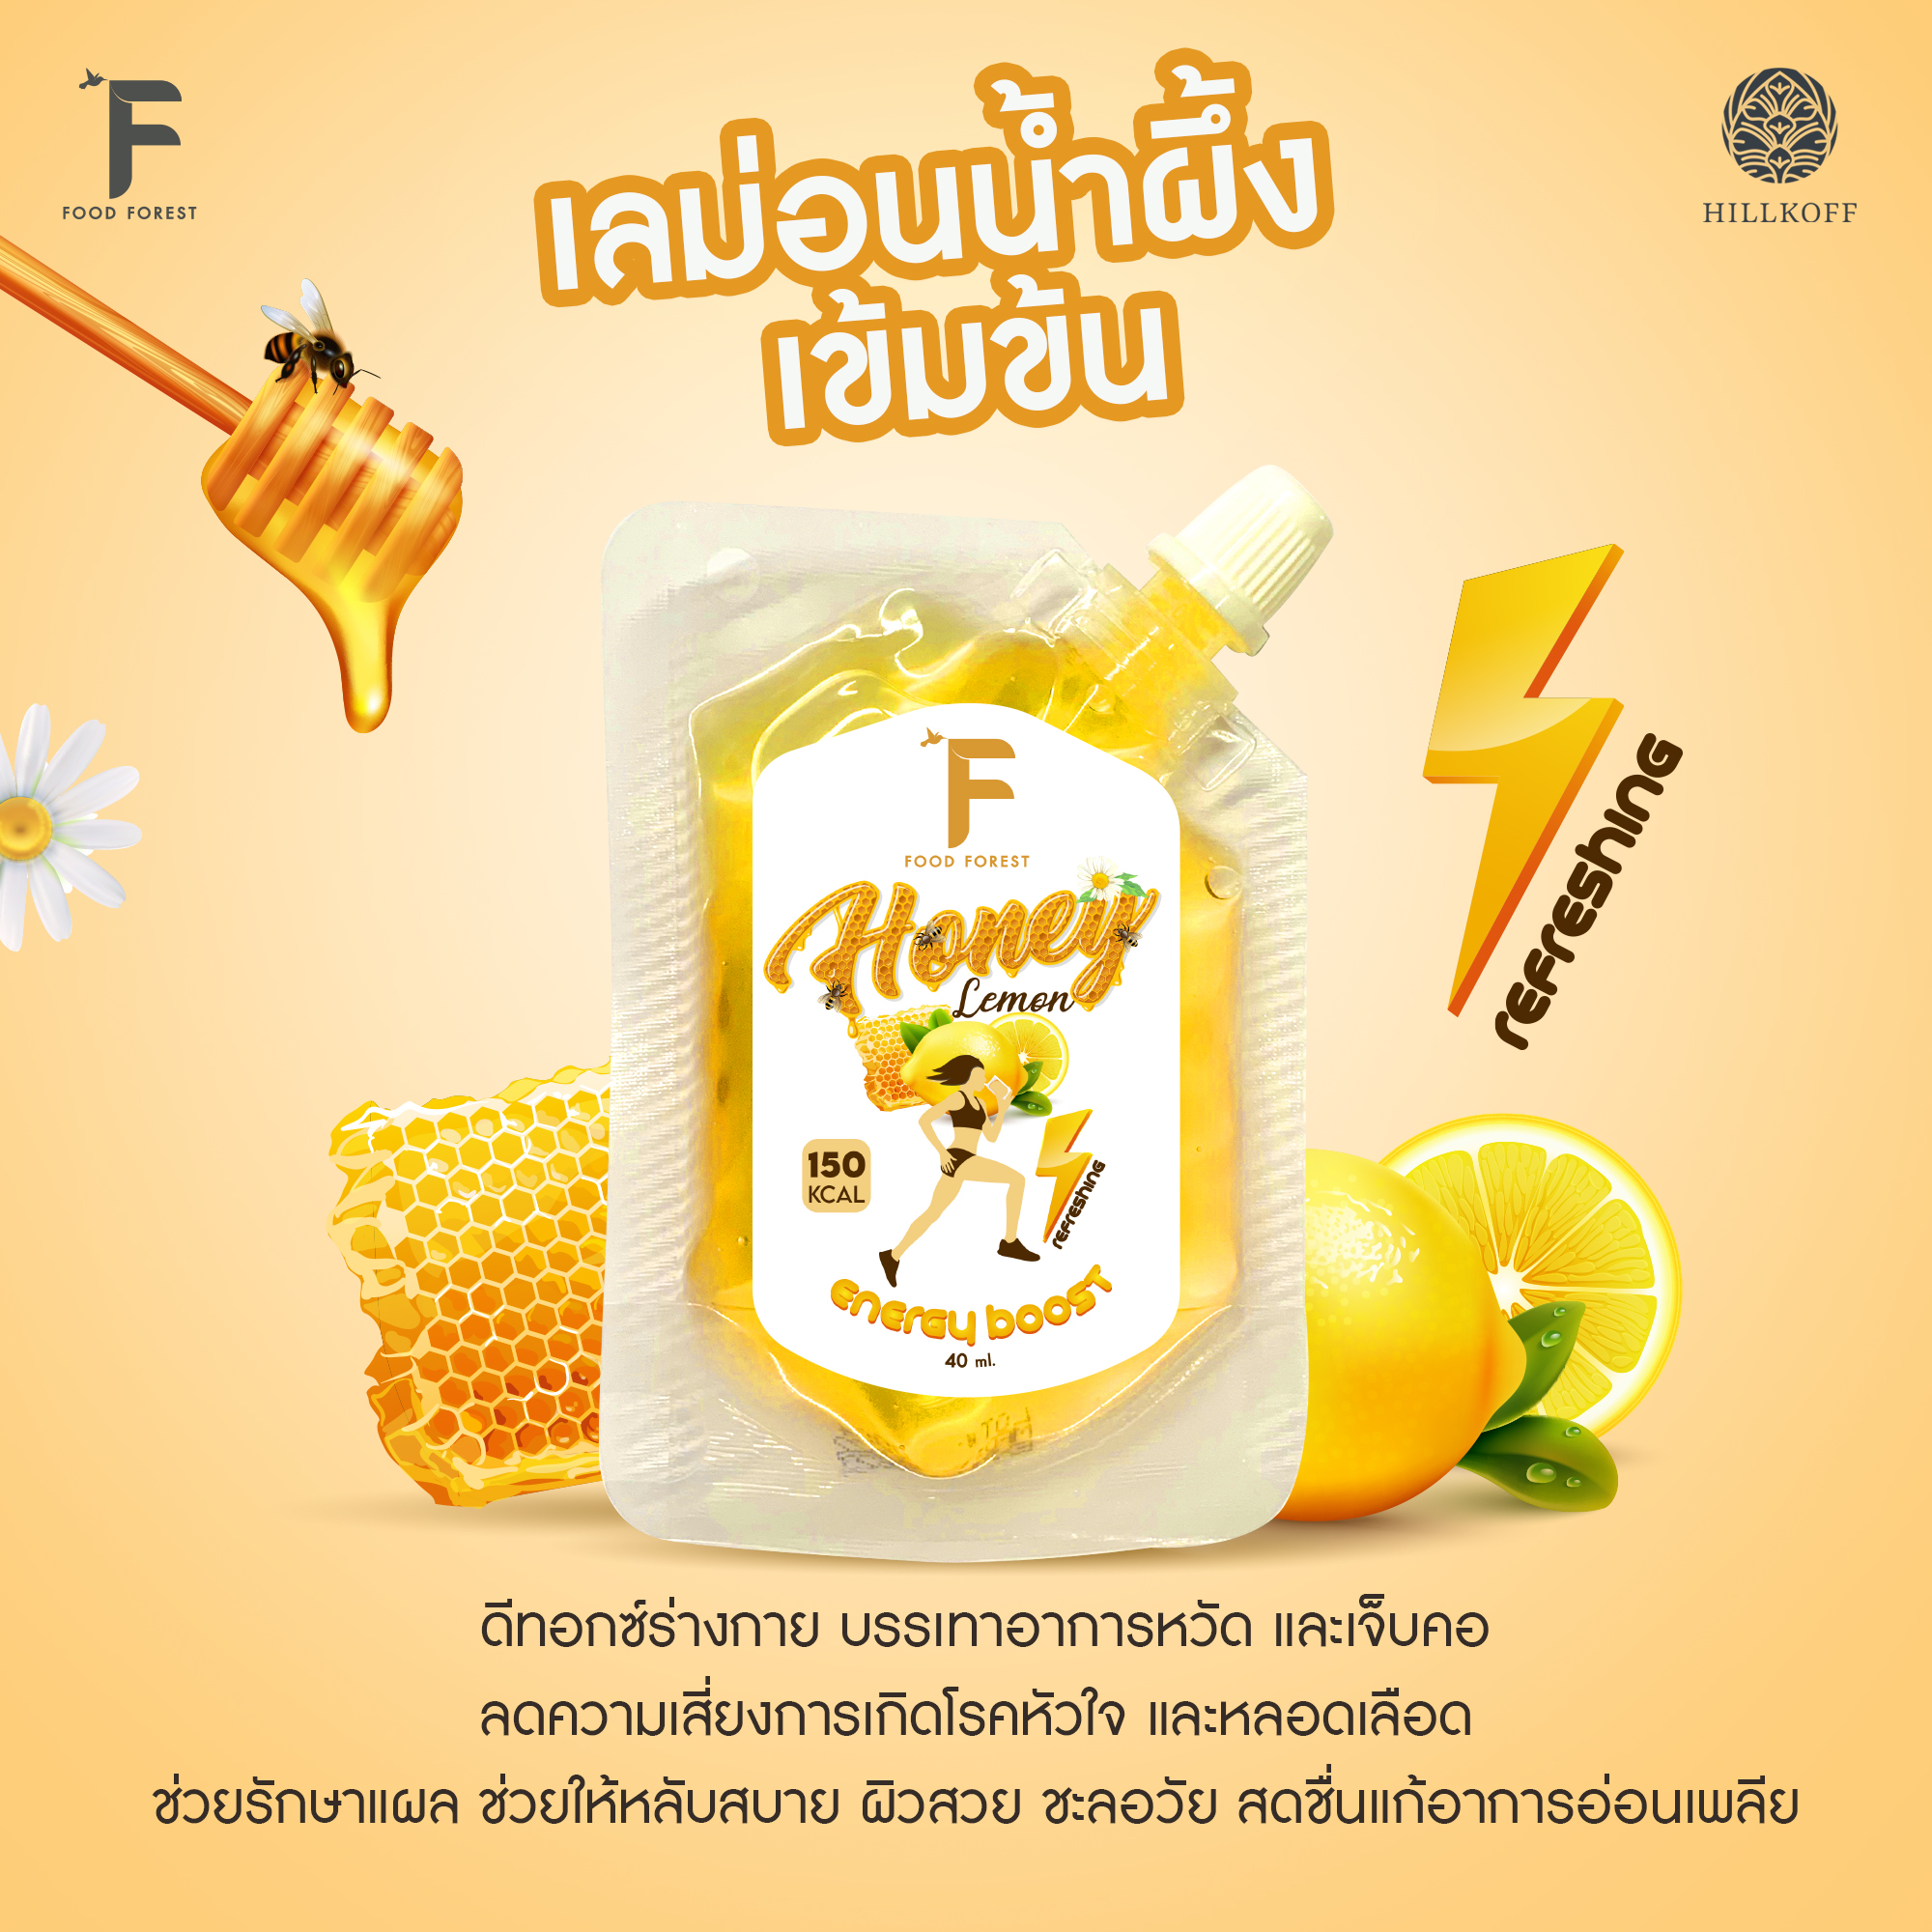 Hillkoff : Honey Lemon Energy น้ำผึ้งให้พลังงานสูง 150 Kcal ขนาด 40 ml